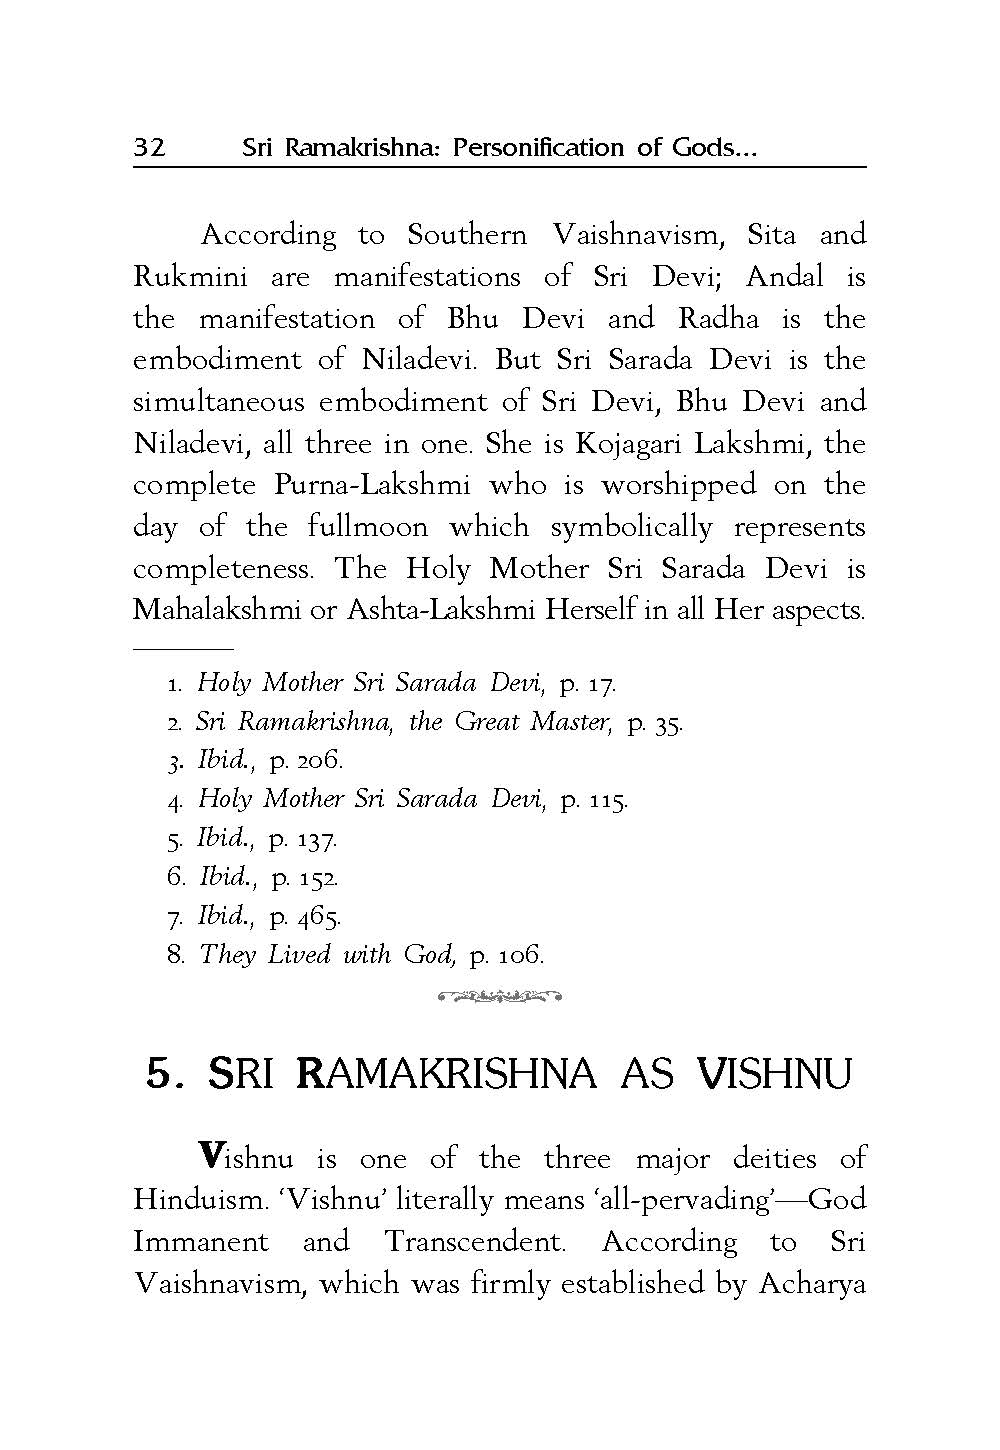 Sri Ramakrishna - The Personification of Gods and Goddesses